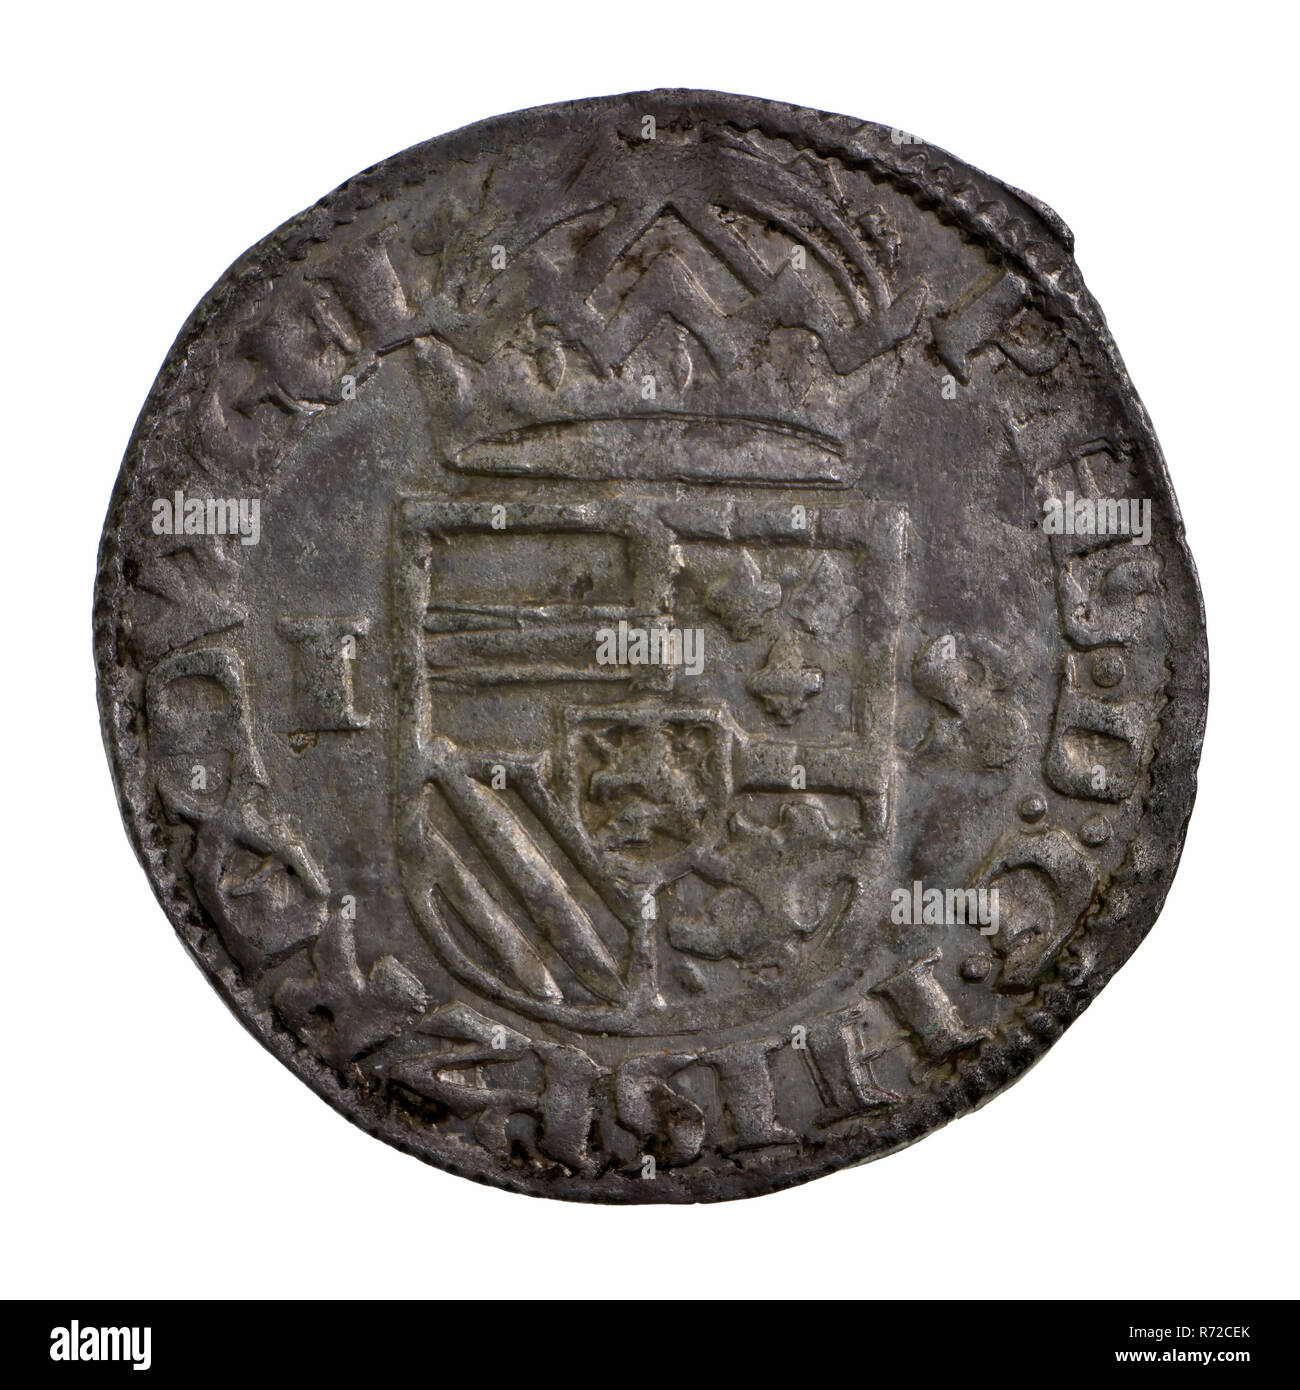 Stuiver, Gelderland, z.j., penny coin money swap silver, PHS. D: G. HISP. DVX. GEL (Philips by the grace of God King of Spain Duke of Guelders) I S (1 penny) pay off Philip II Stock Photo